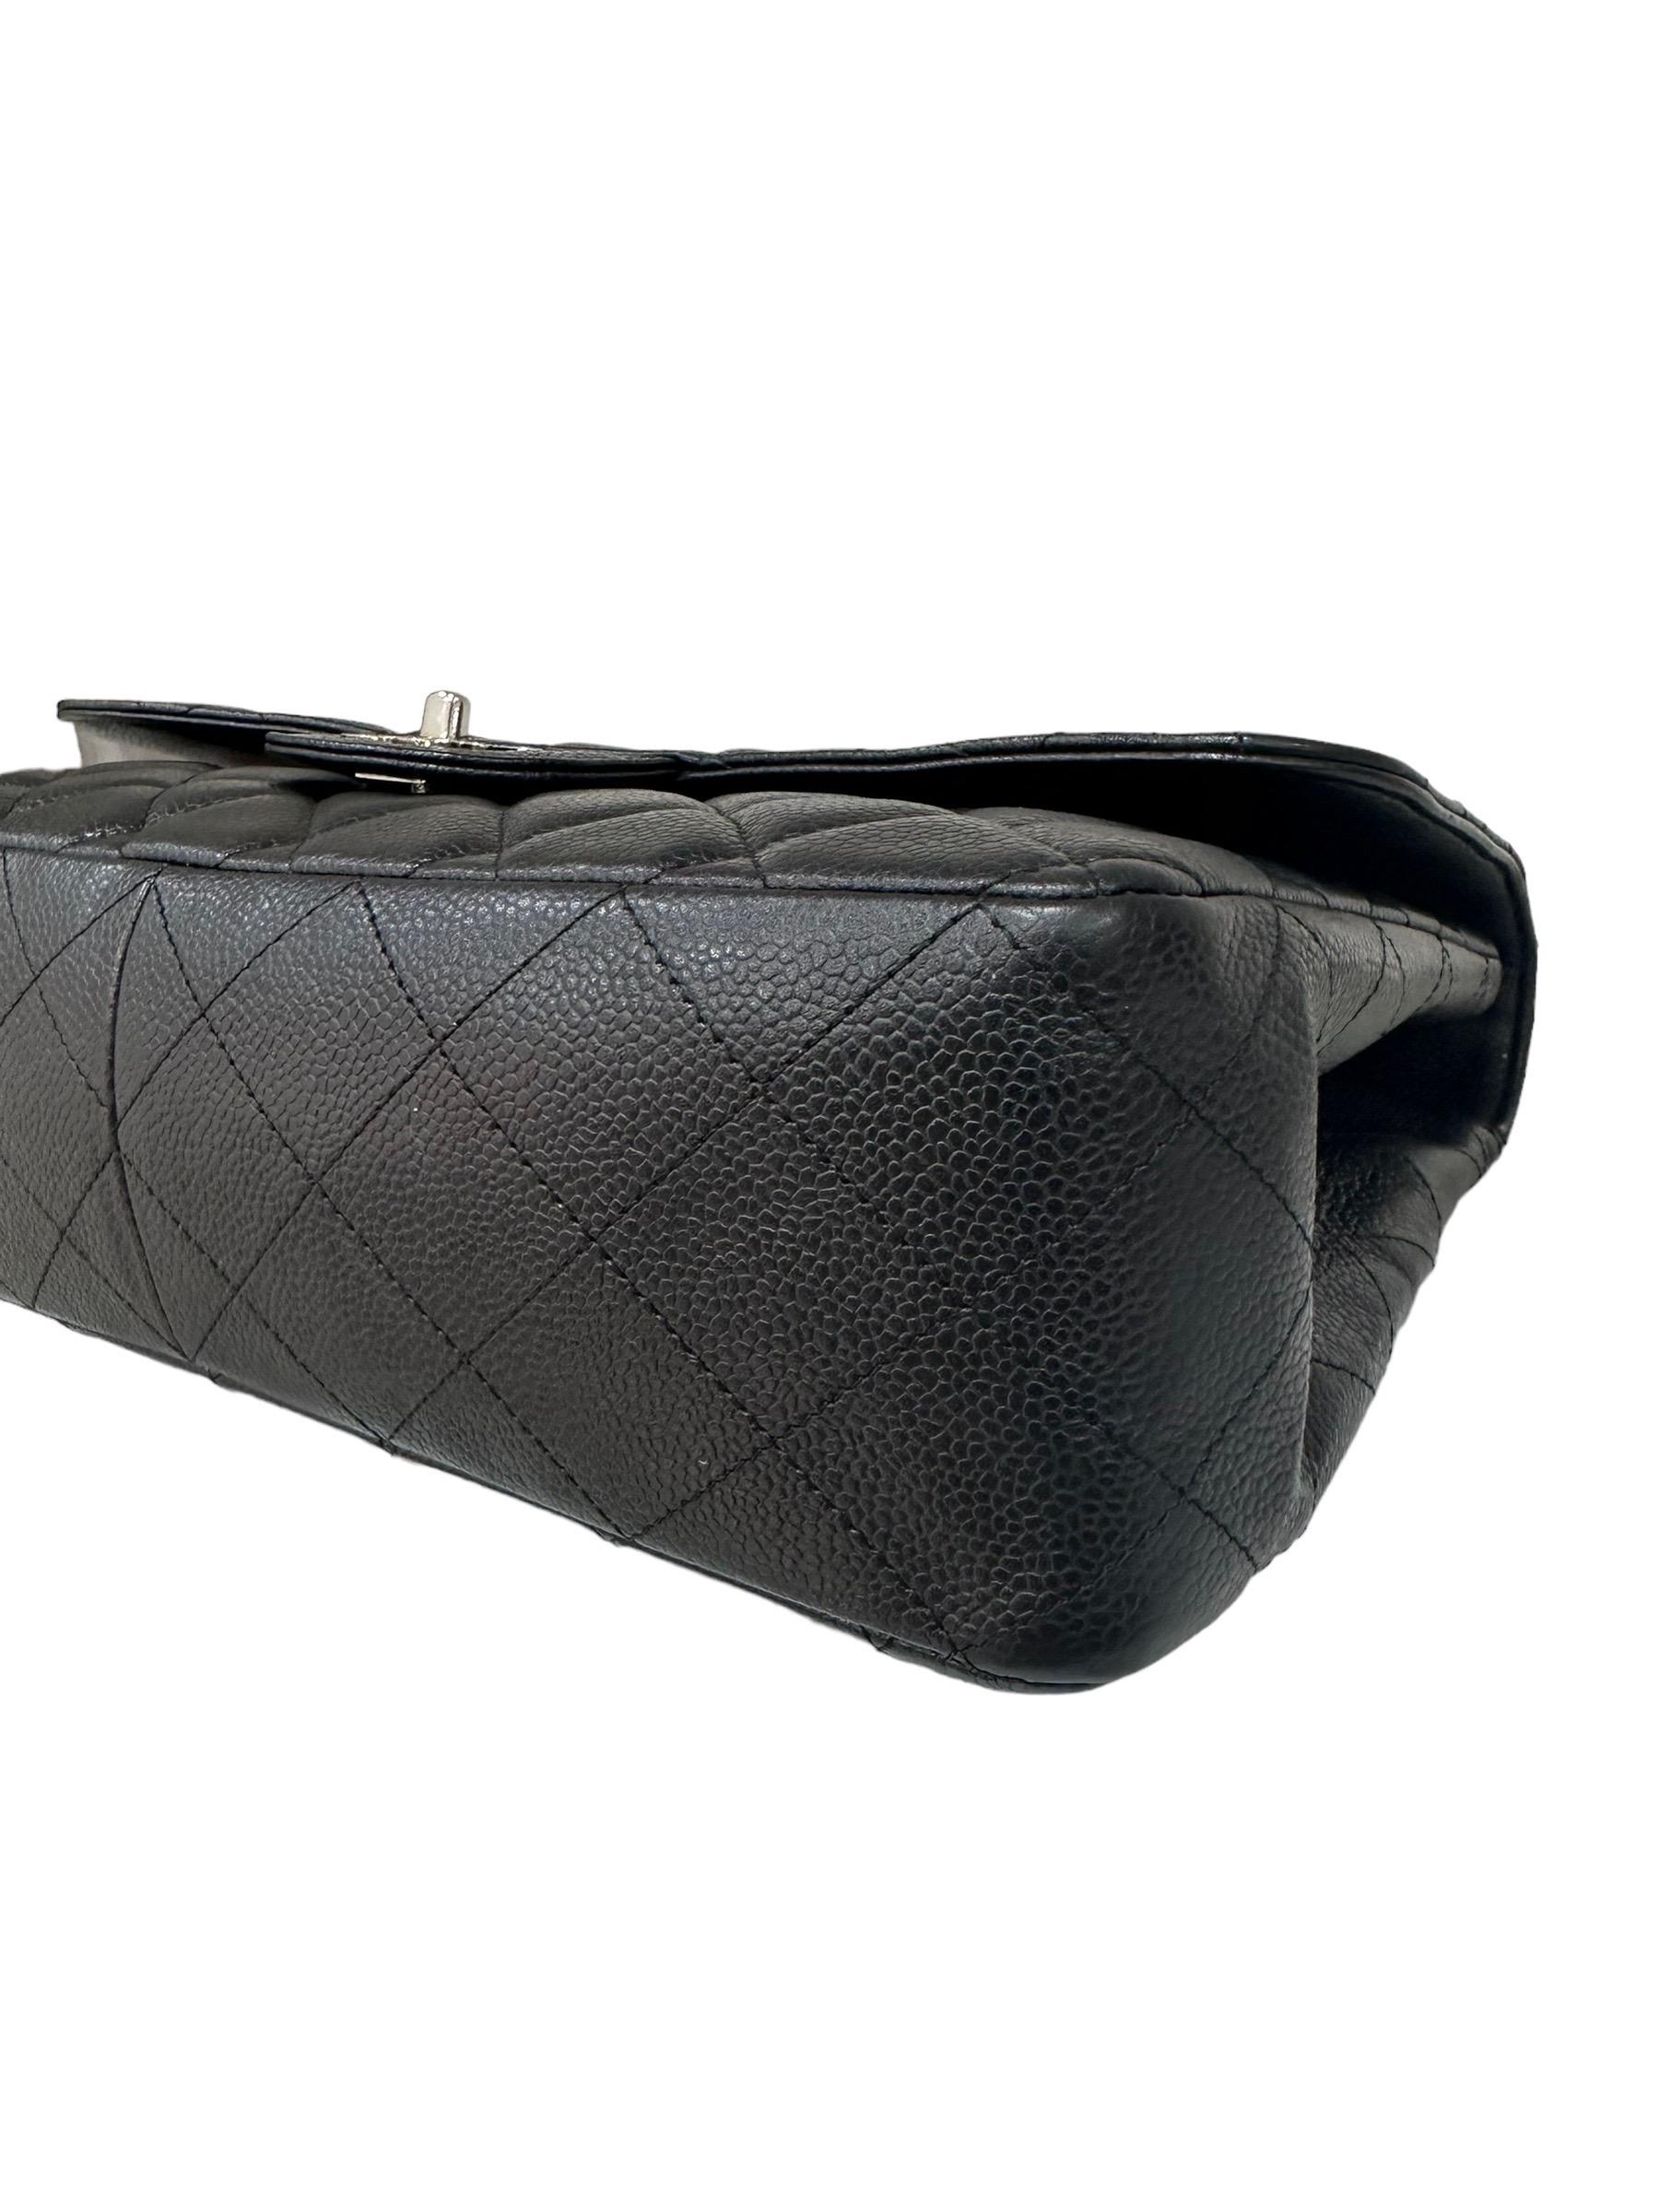 2009 Chanel Jumbo Black Caviar Leather Top Shoulder Bag  For Sale 9